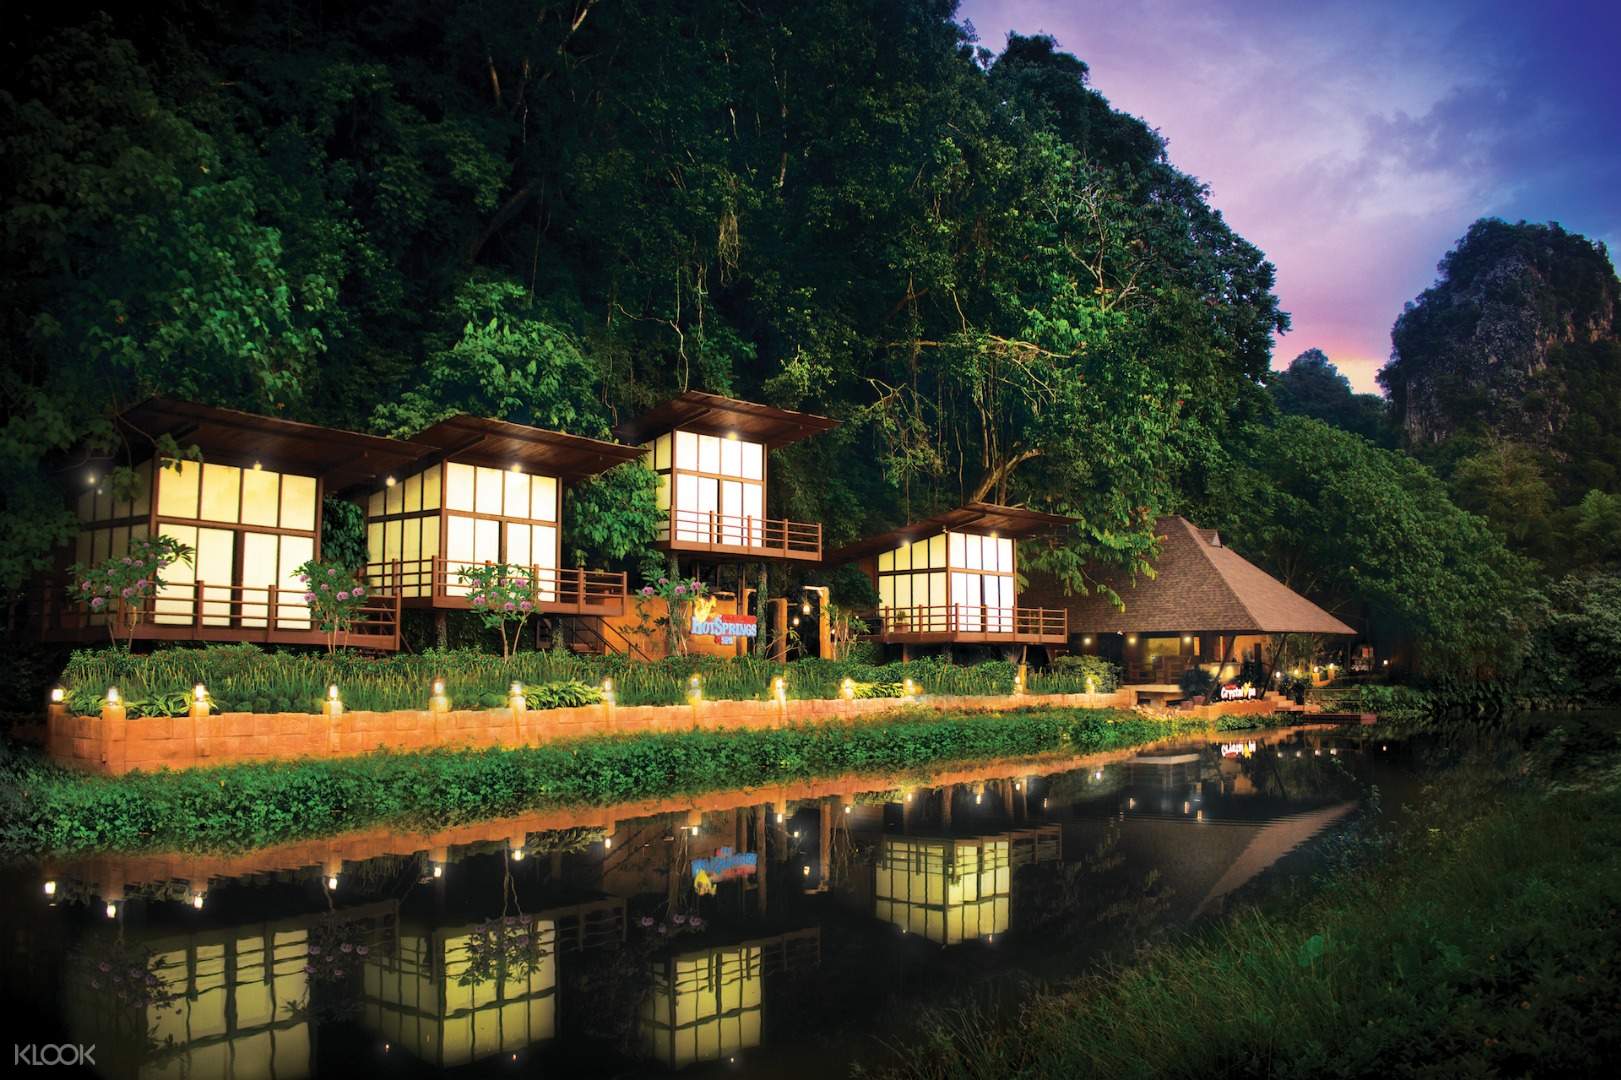 Lost World of Tambun Crystal Spa & Massage Experience - Klook Malaysia